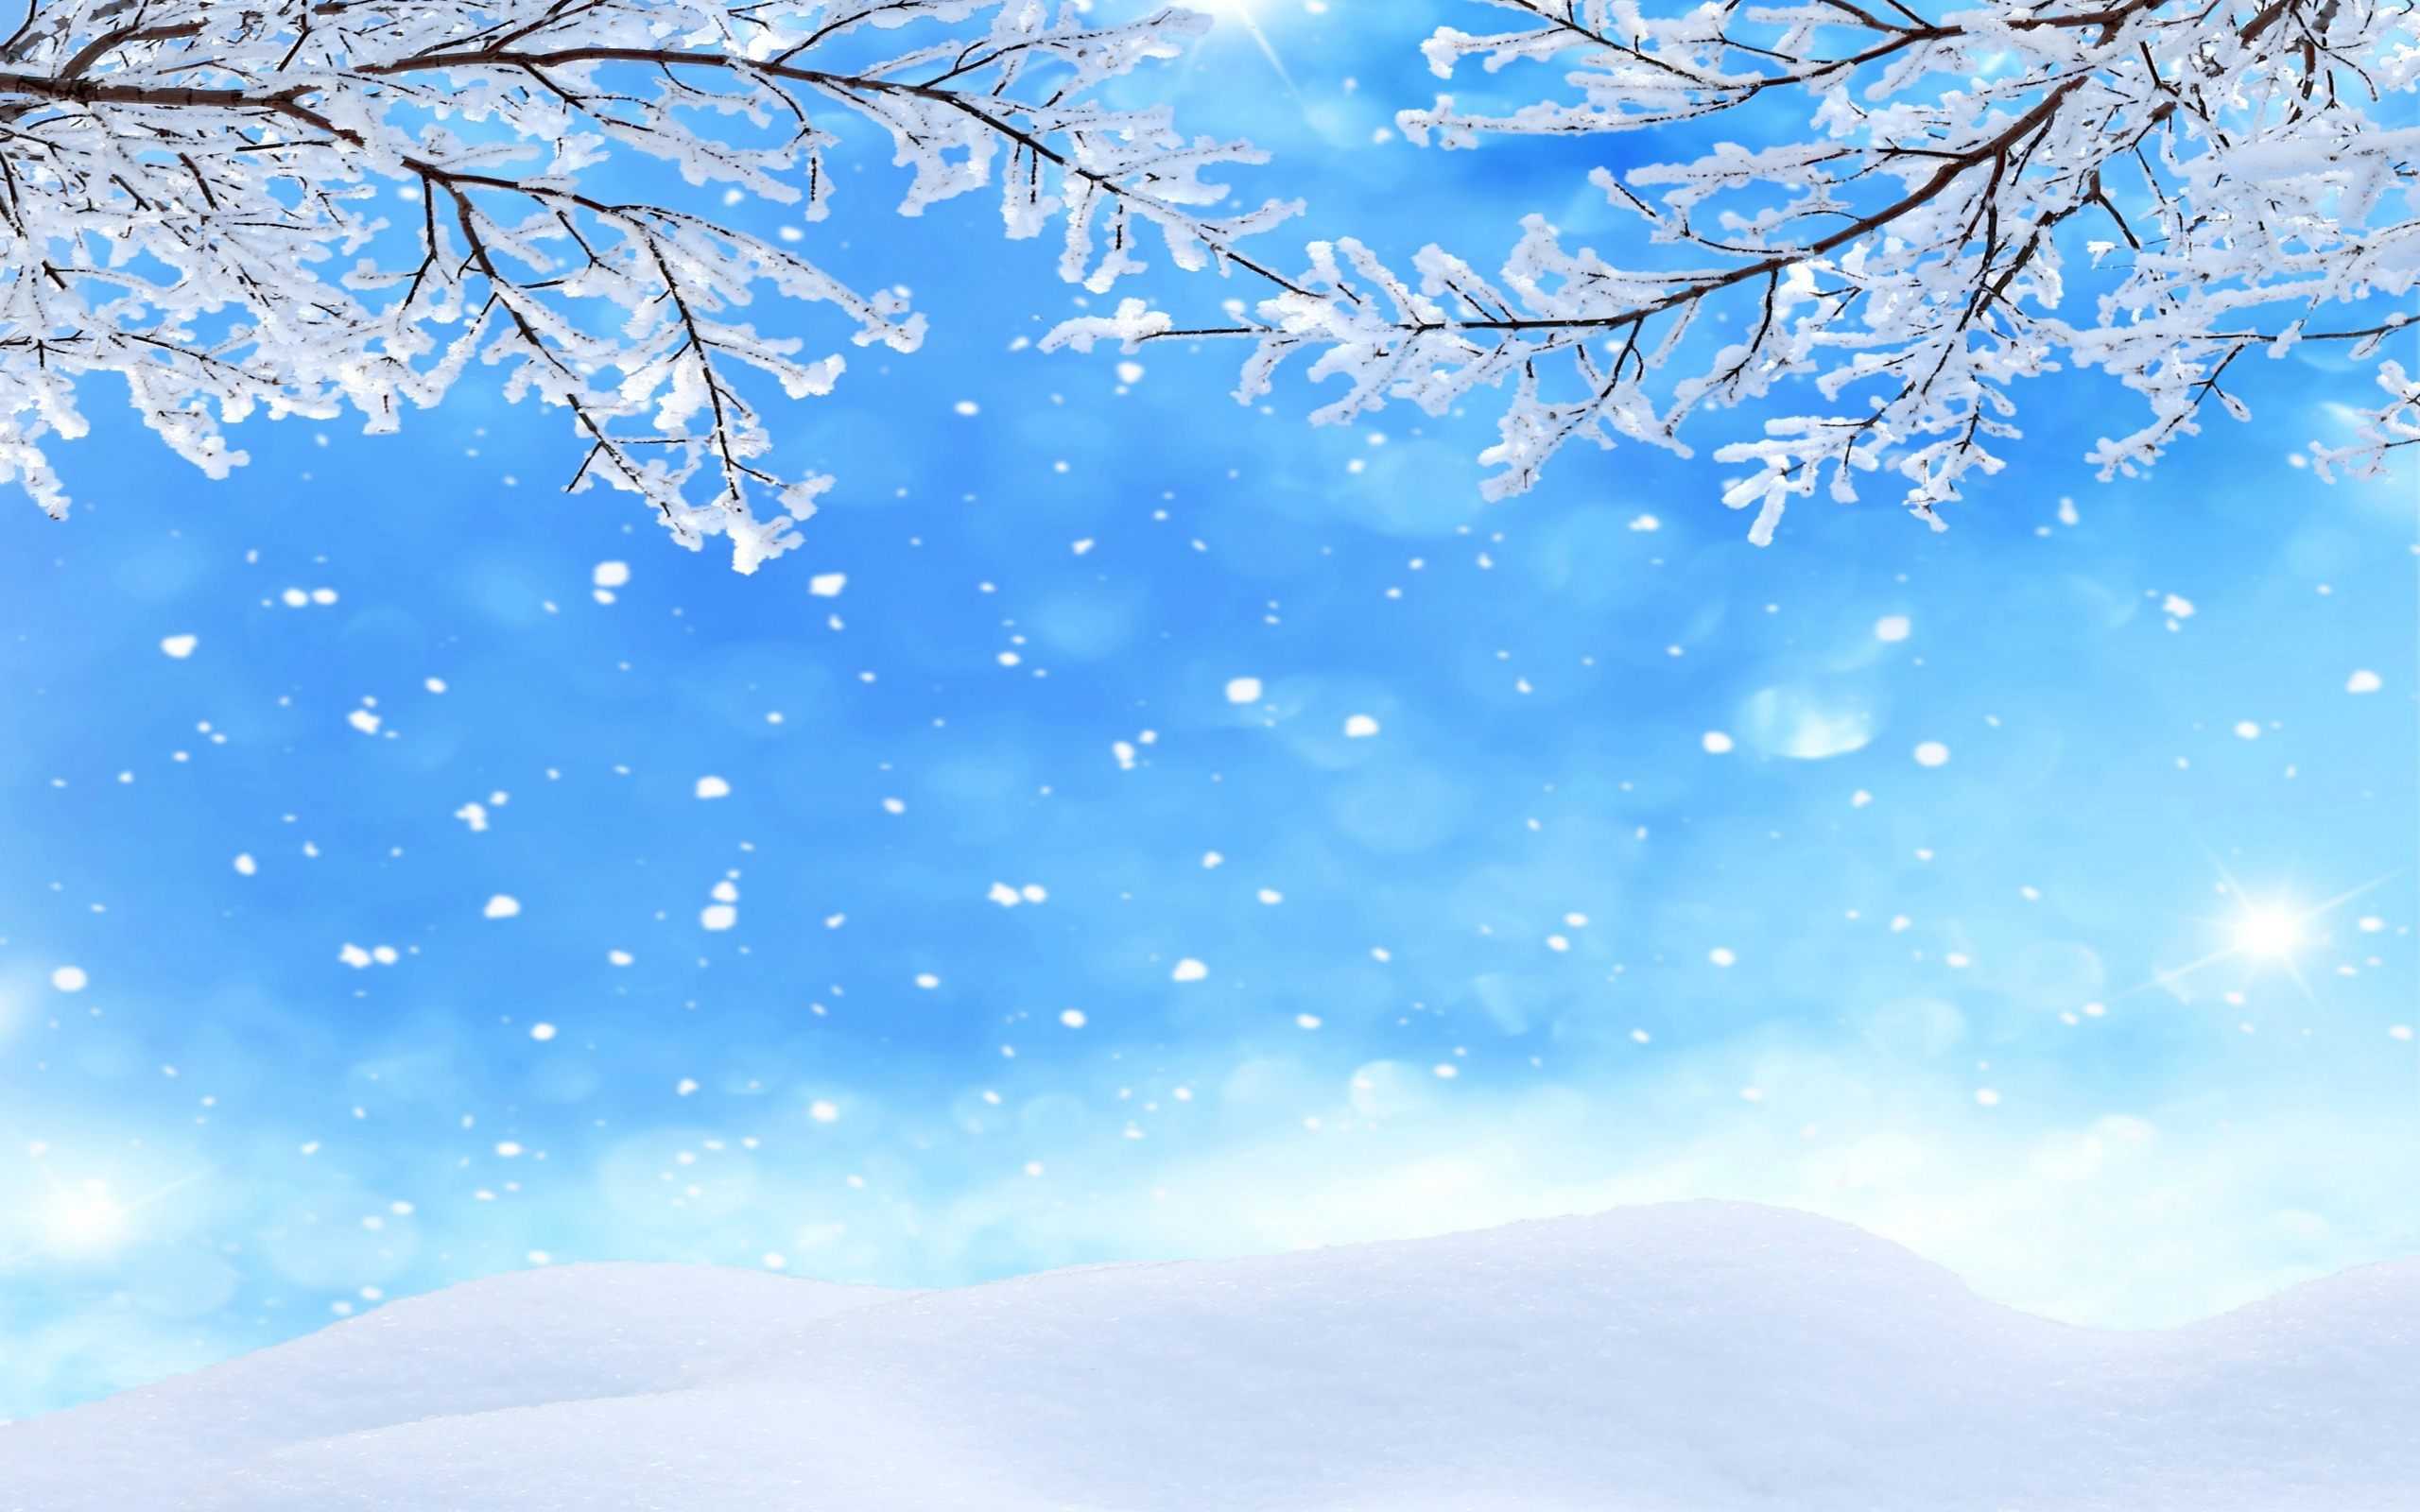 Cute Winter Backgrounds For Desktop